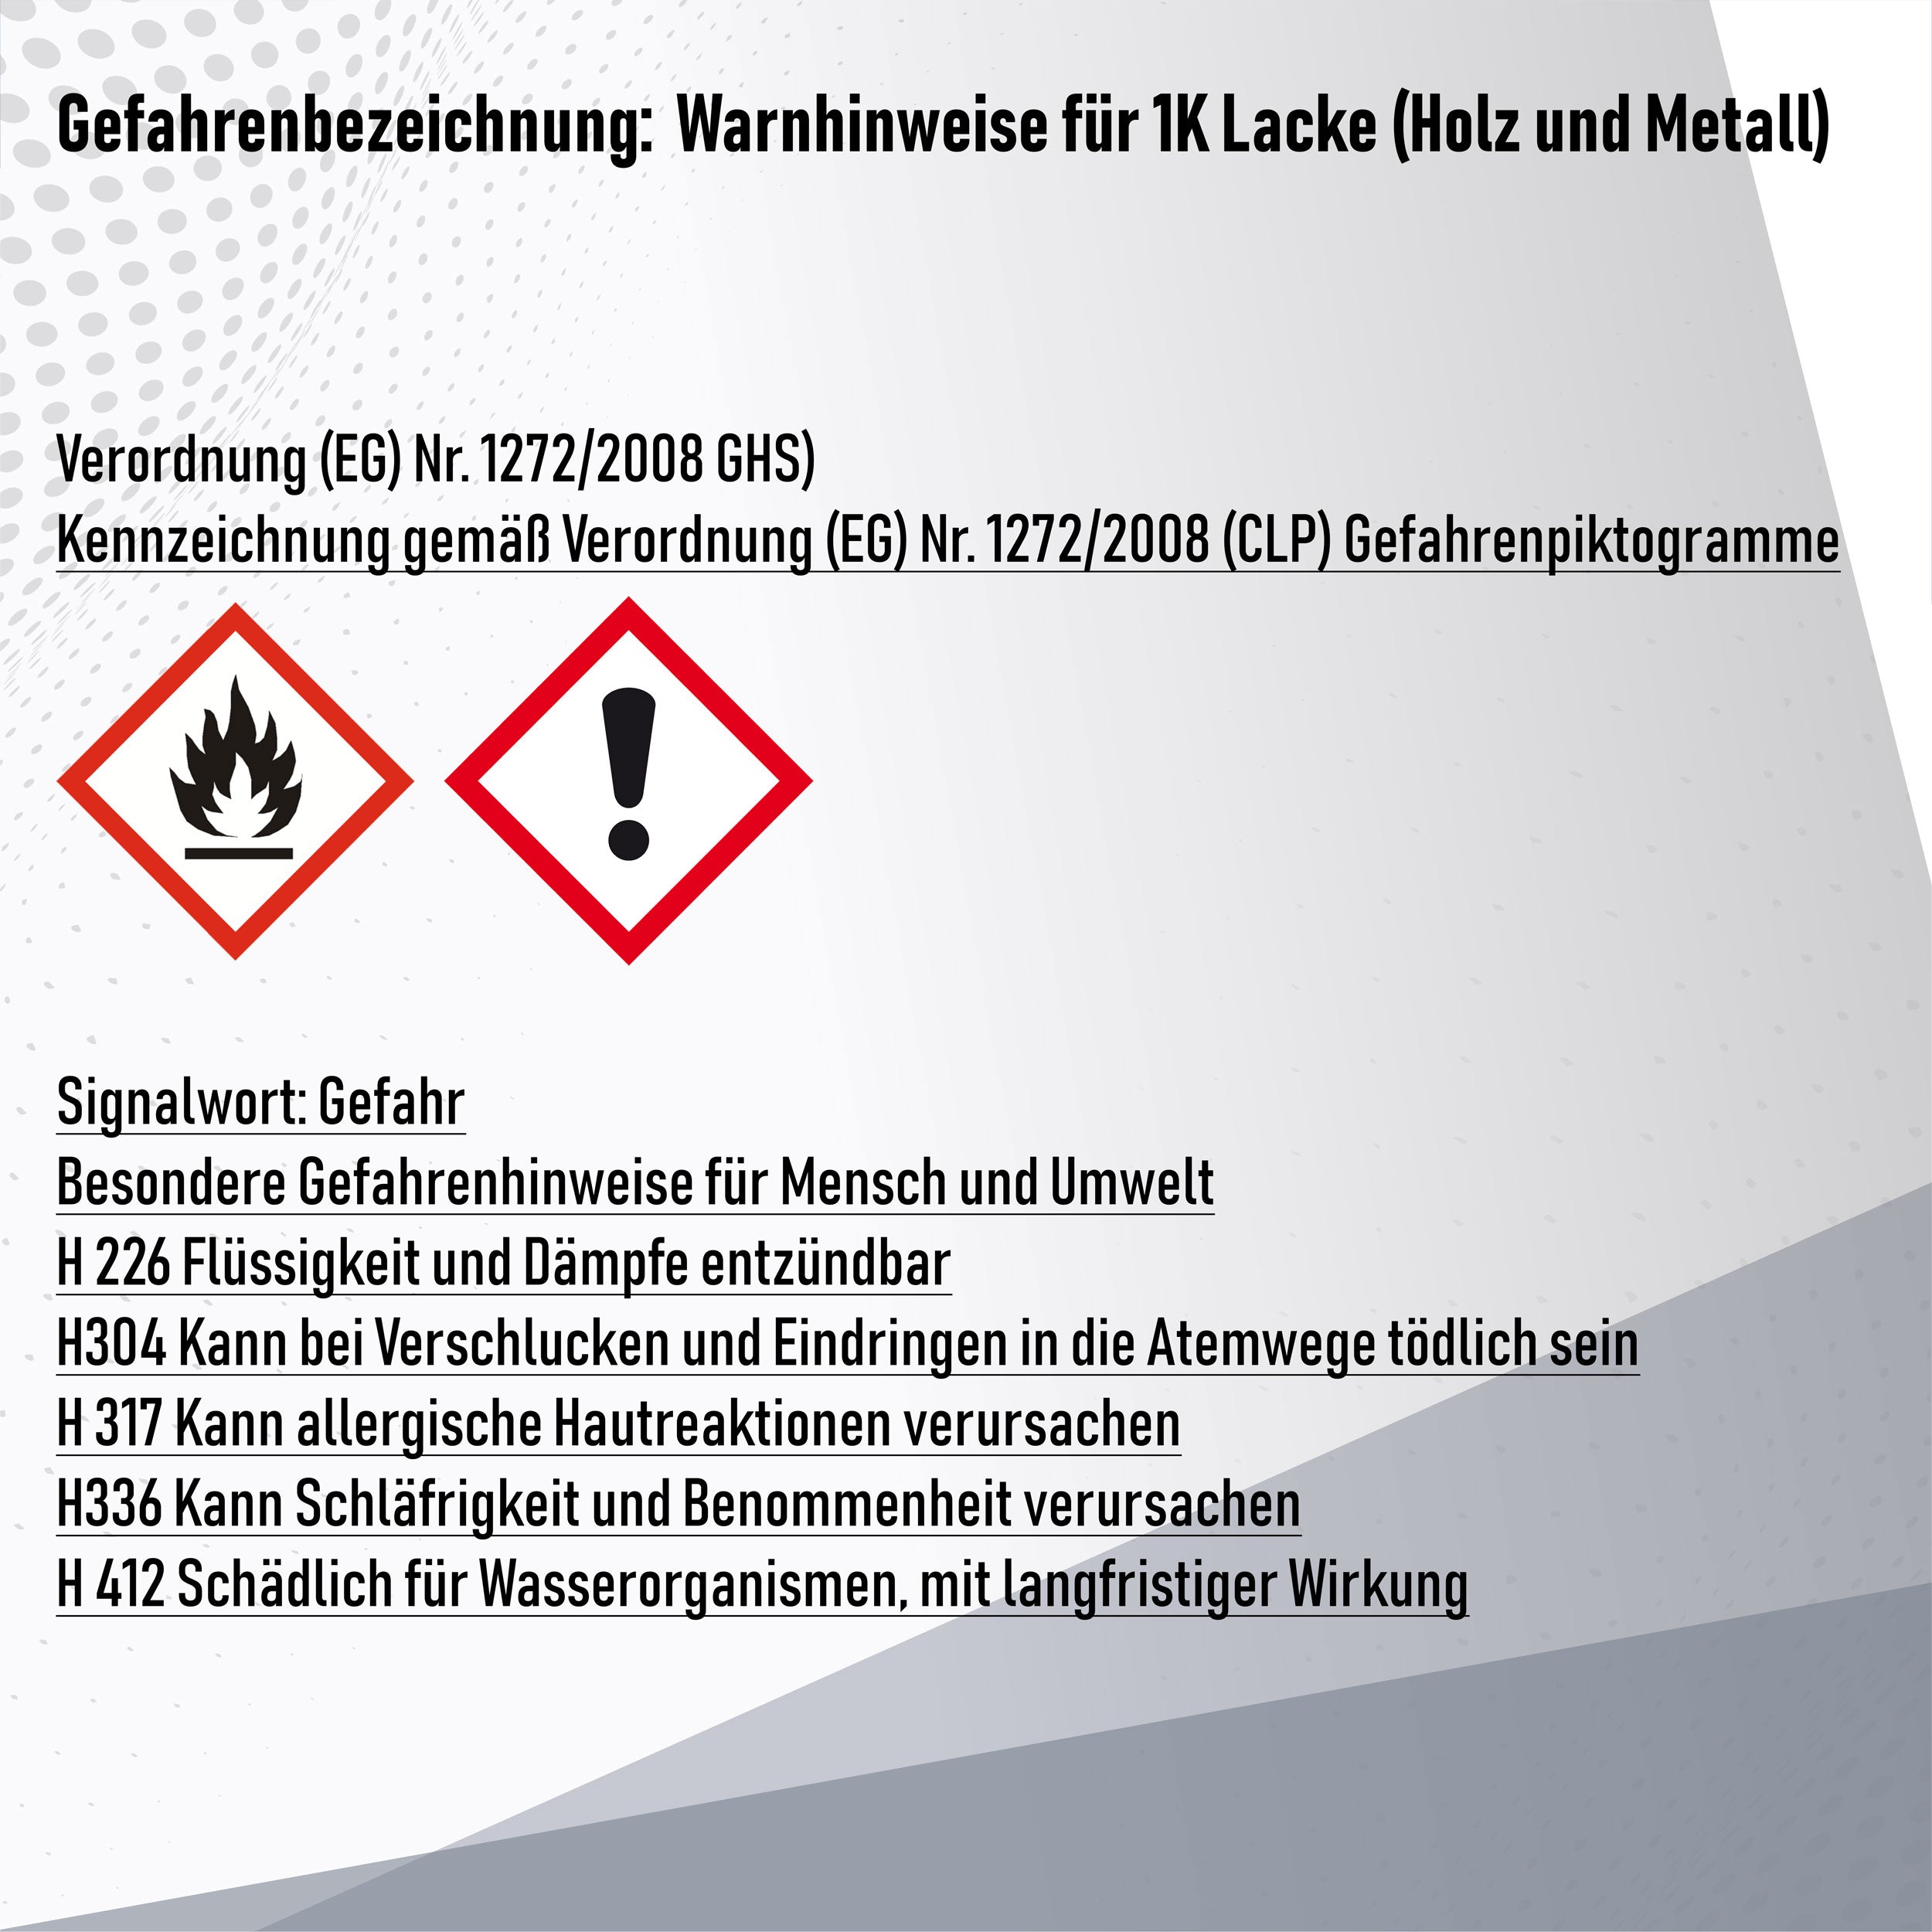 Buntlack RAL 1013 Perlweiß- Holzlack Holzfarbe Metallfarbe Lausitzer Farbwerke